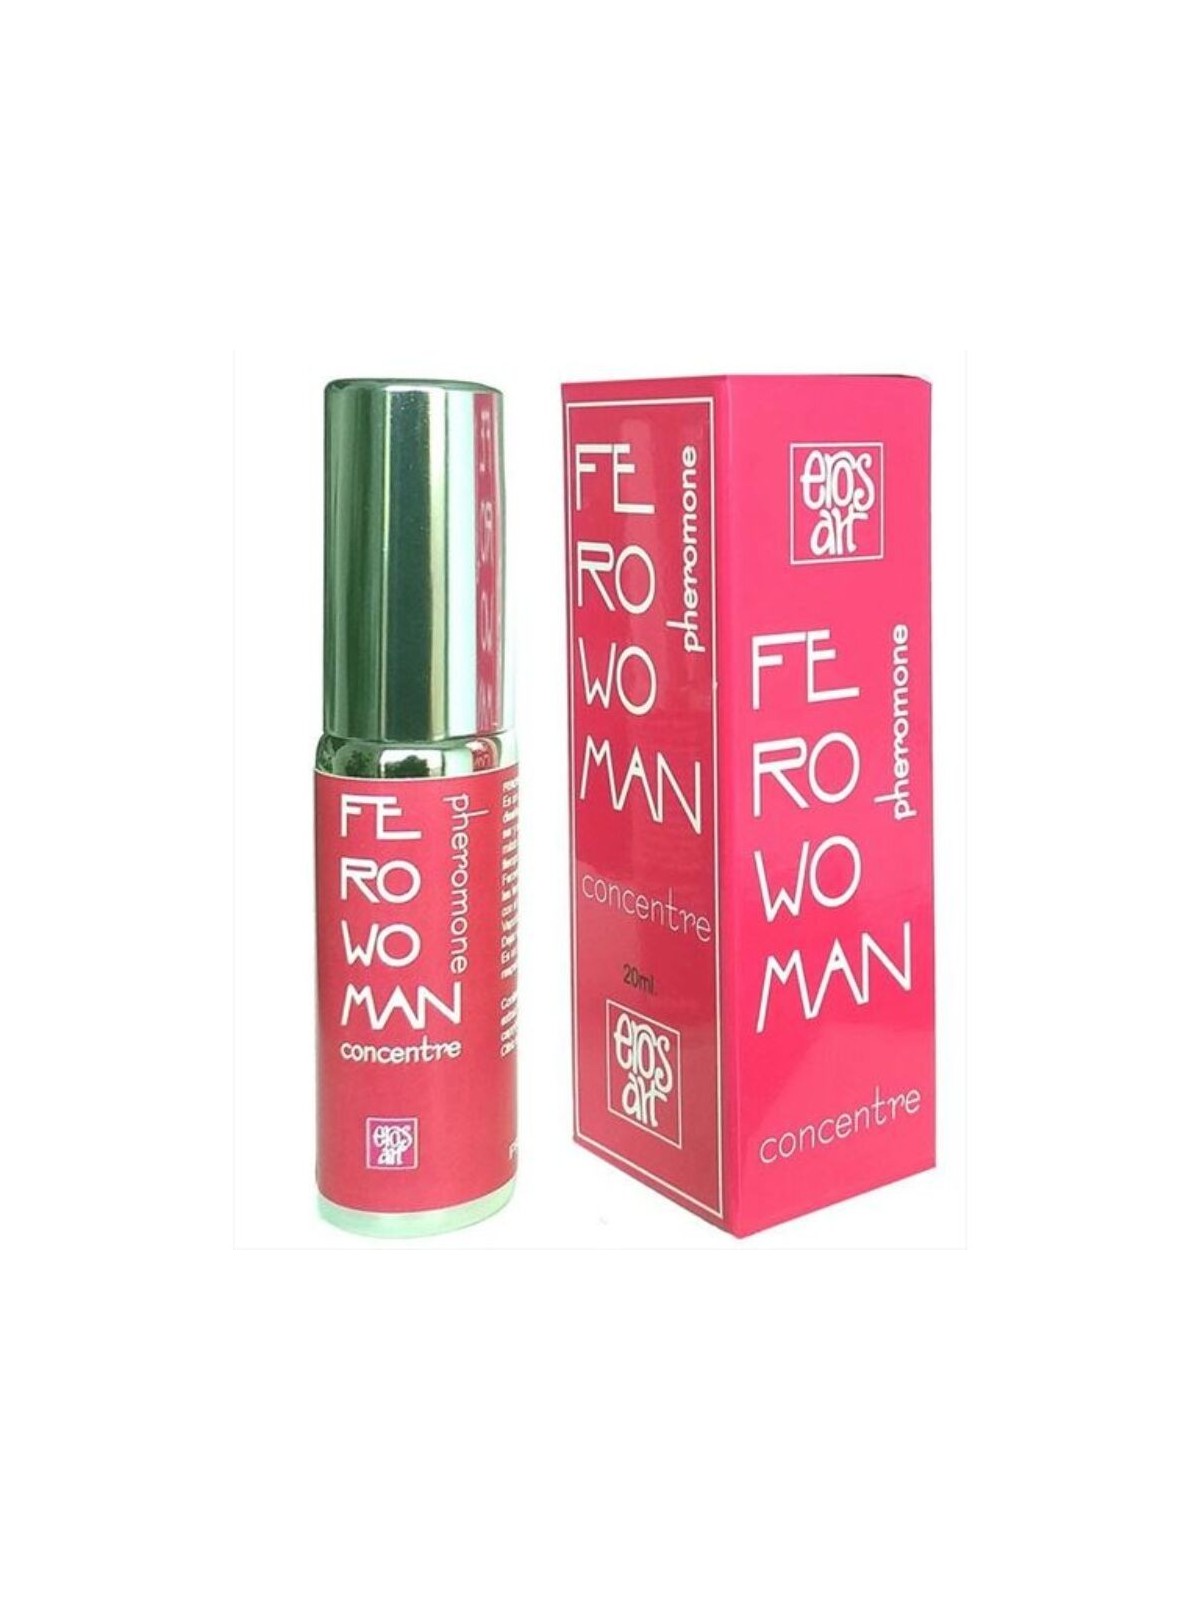 Erosart Ferowoman Concentrado De Feromonas Para Mujer - Comprar Perfume feromona Eros-Art - Perfumes con feromonas (1)